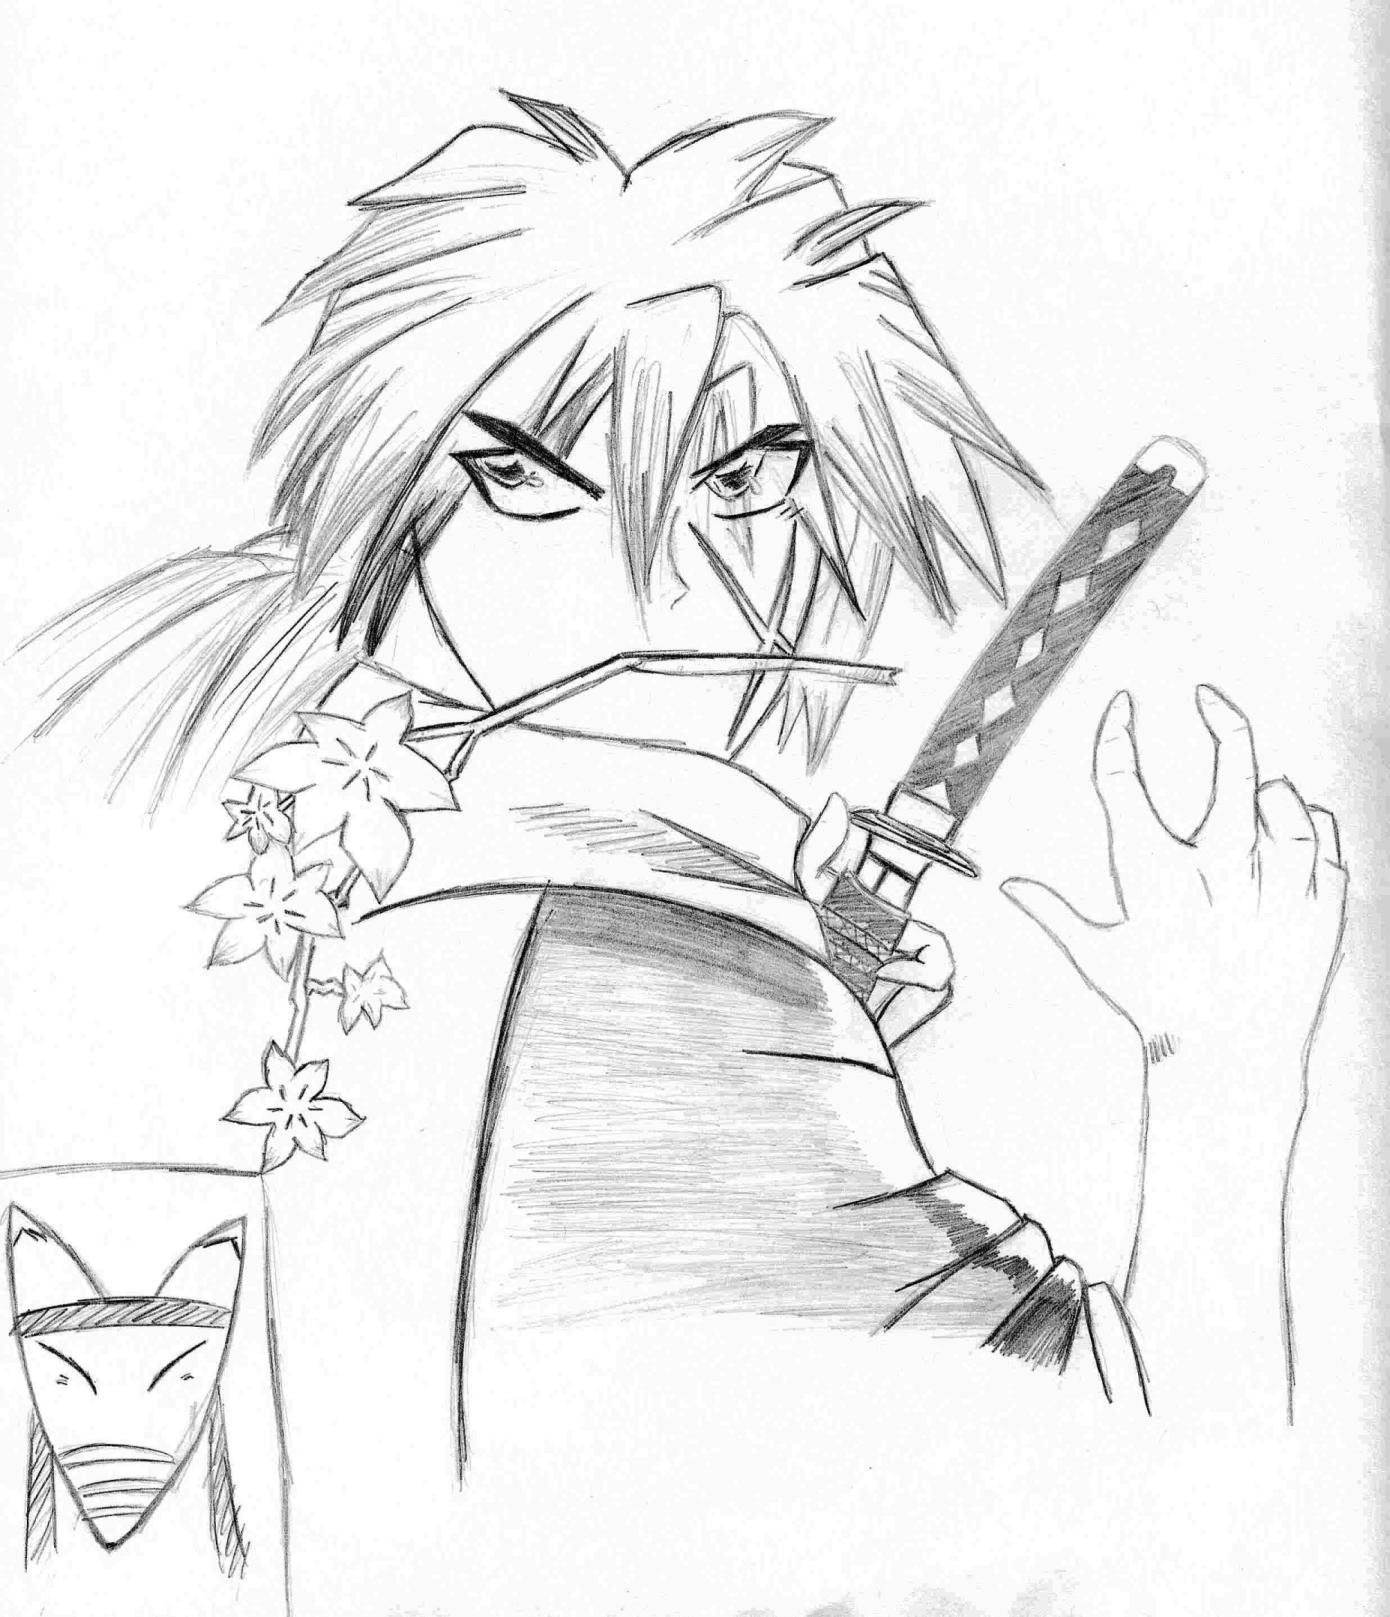 kenshin holding a flower by kakashi